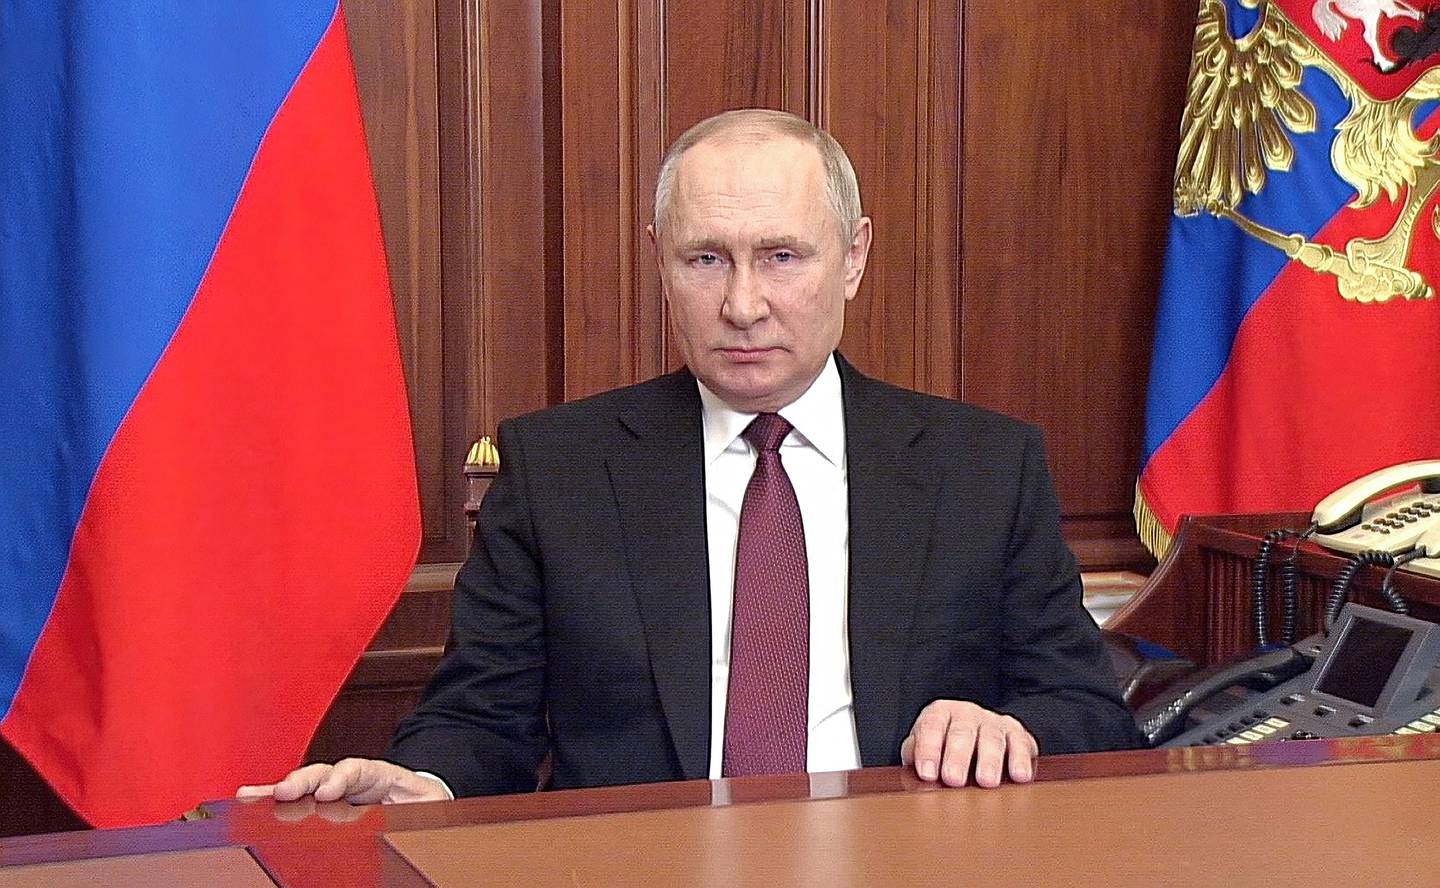 Russlands president Vladimir Putin under sin tale som ble sendt 24. februar.